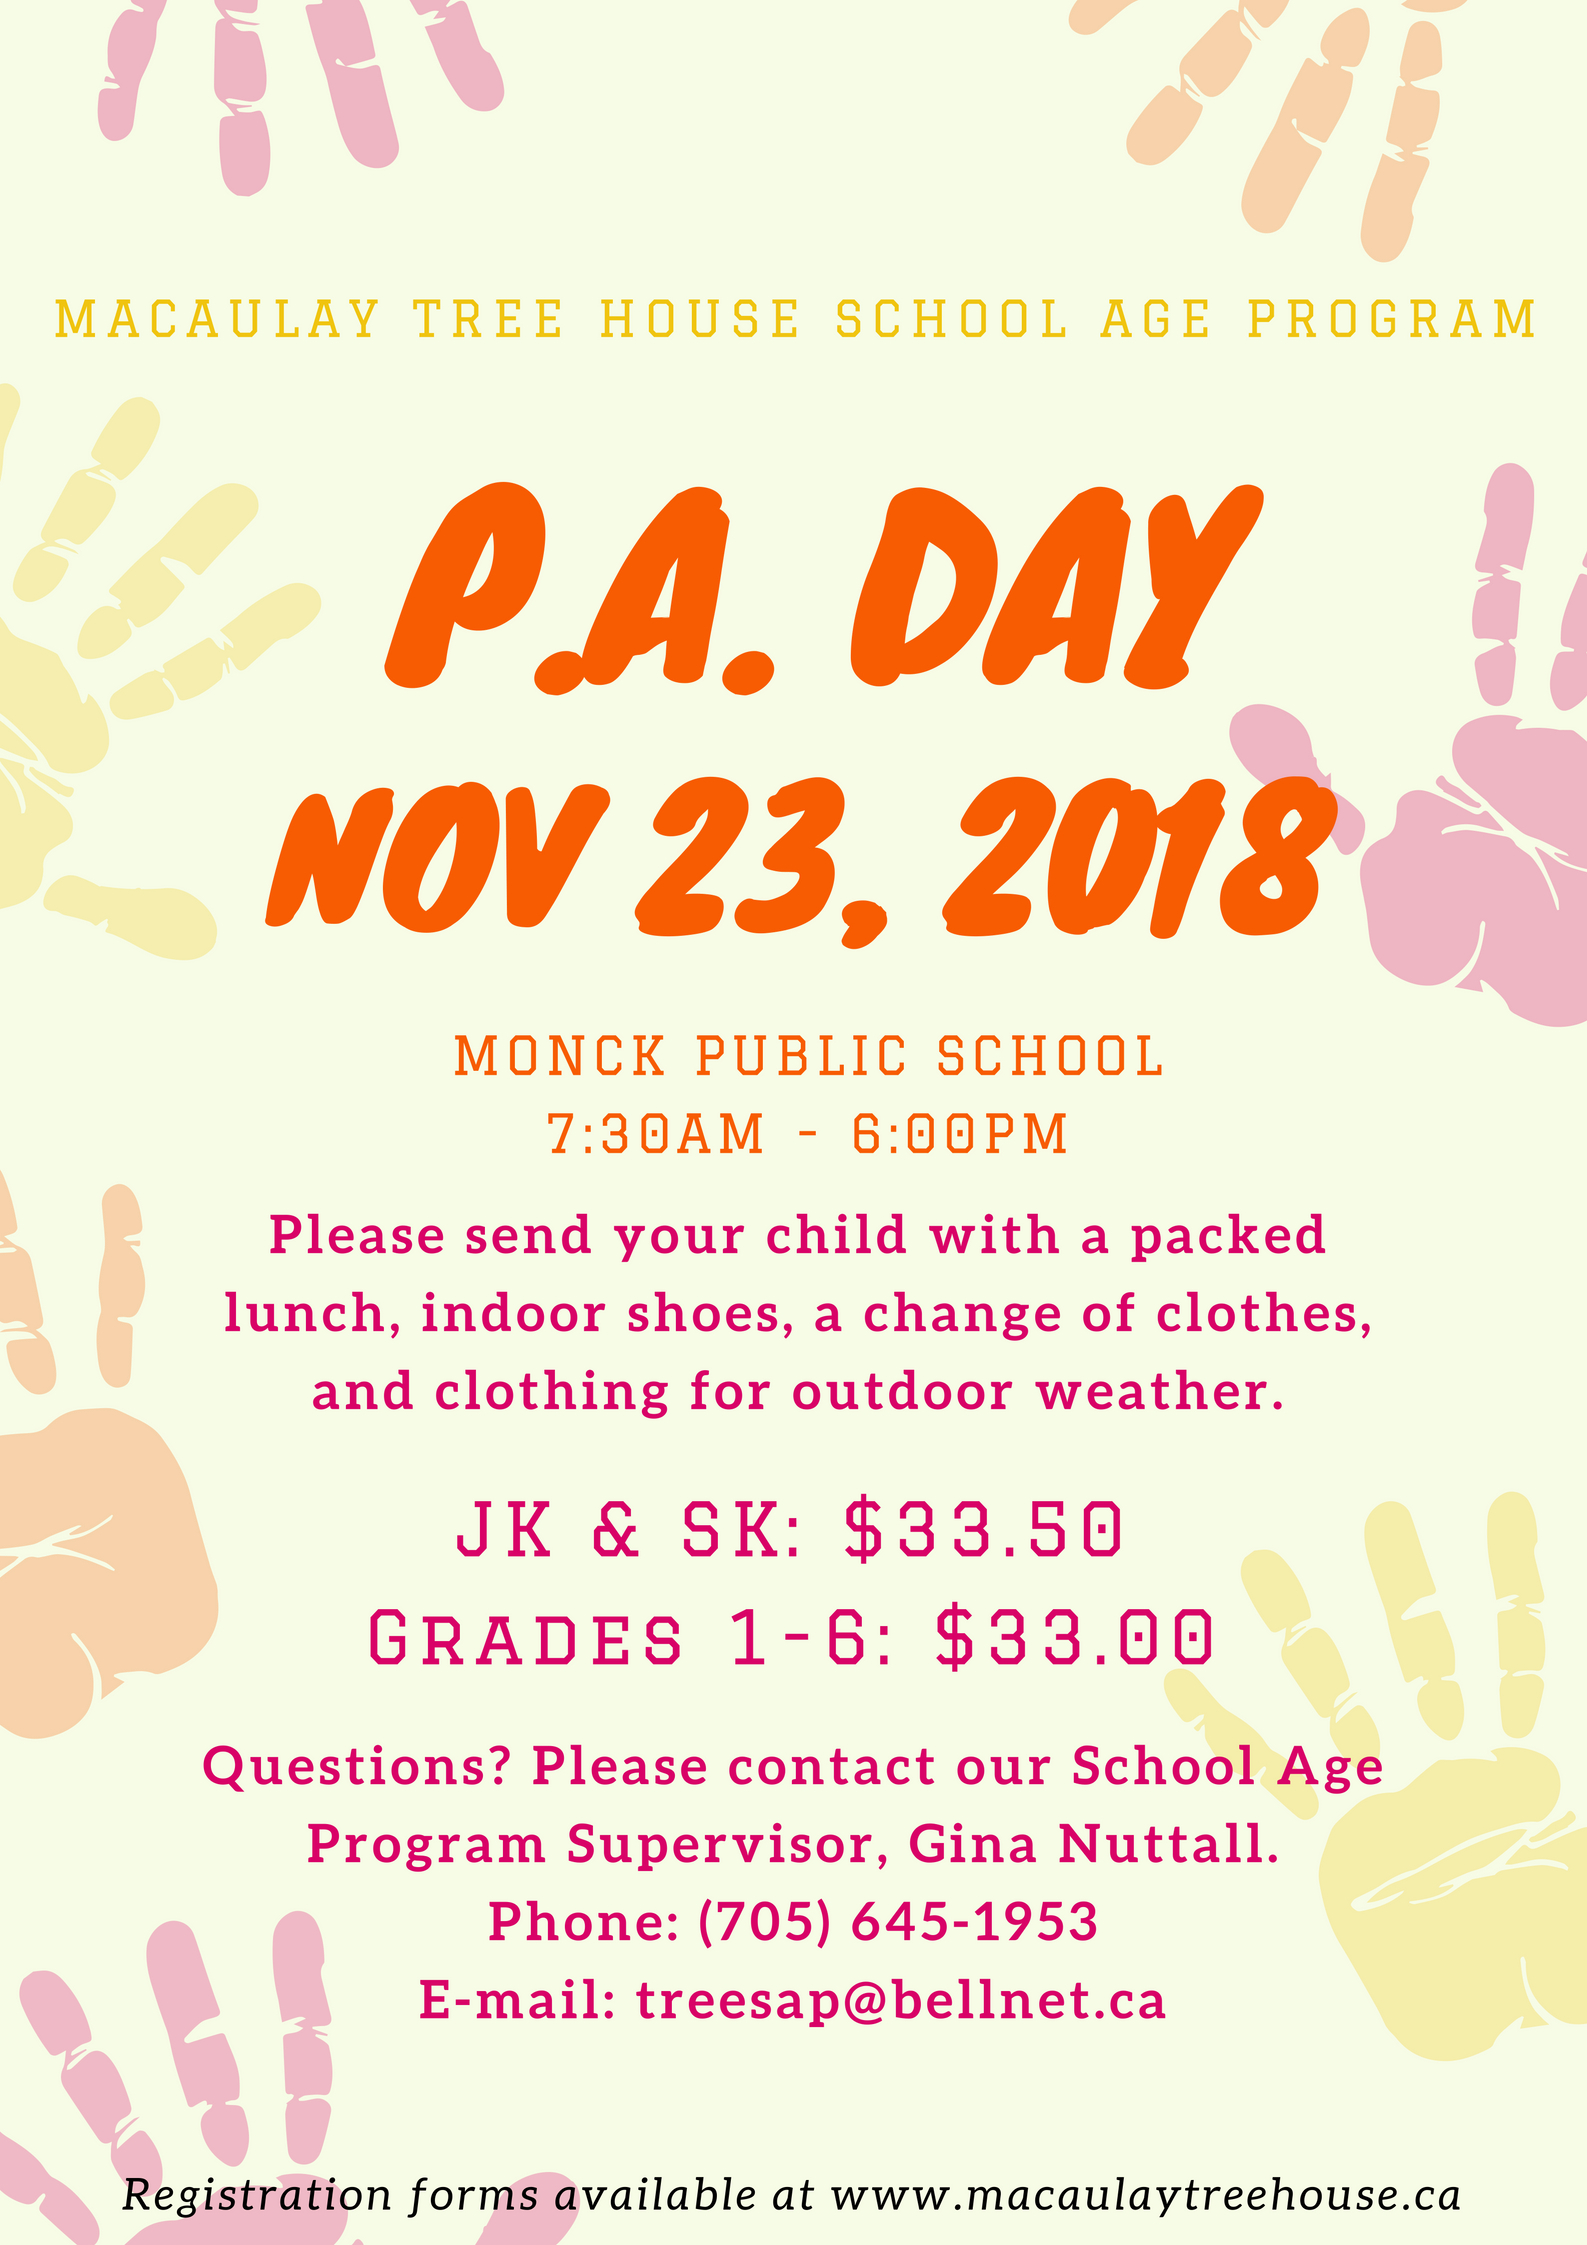 P.A. Day: November 23, 2018